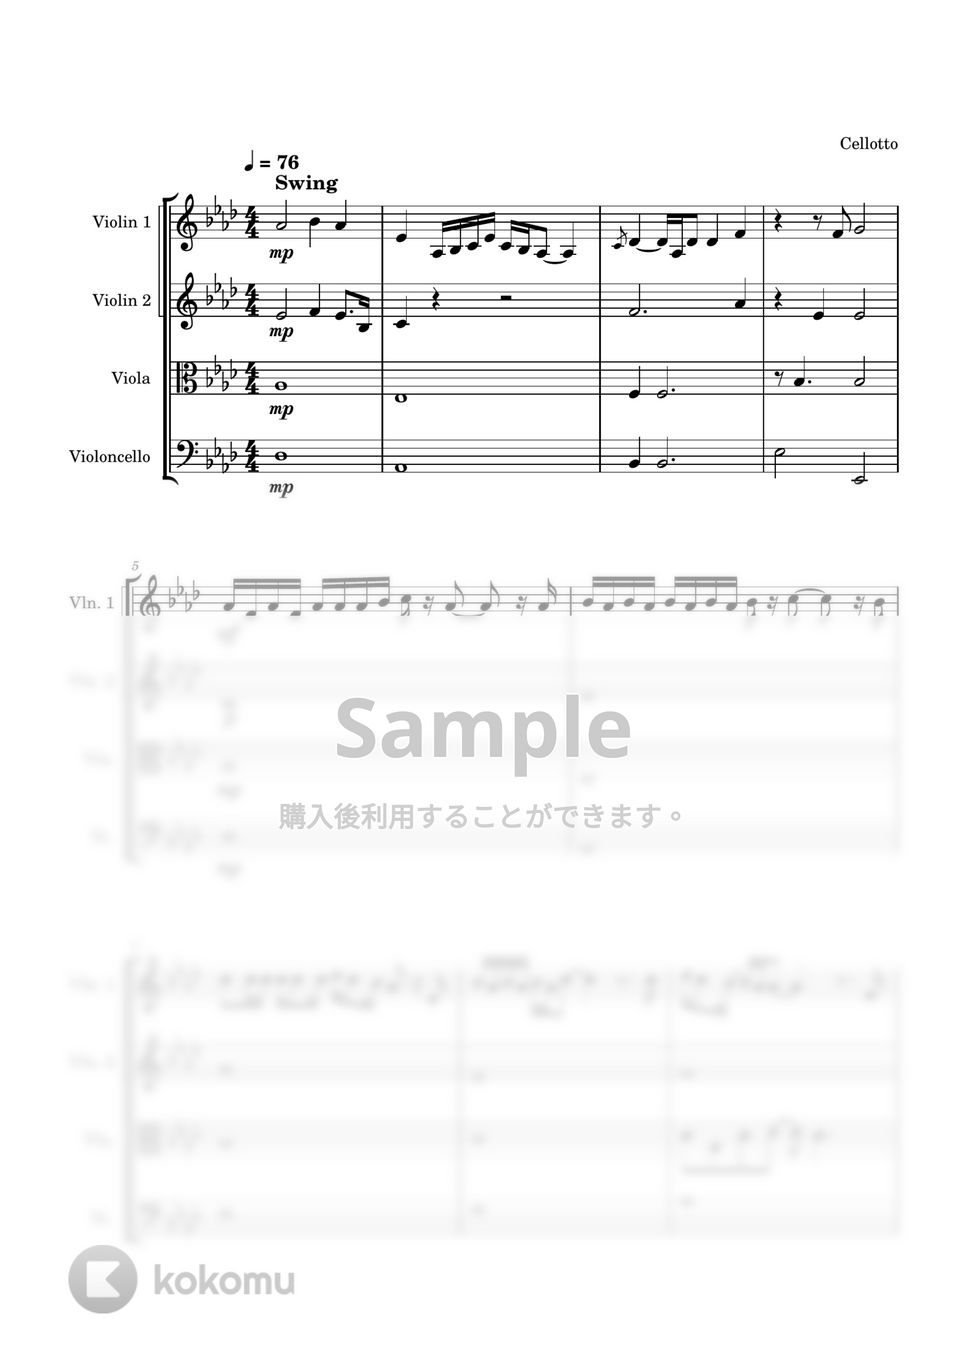 川崎鷹也 - 魔法の絨毯 (弦楽四重奏) by Cellotto